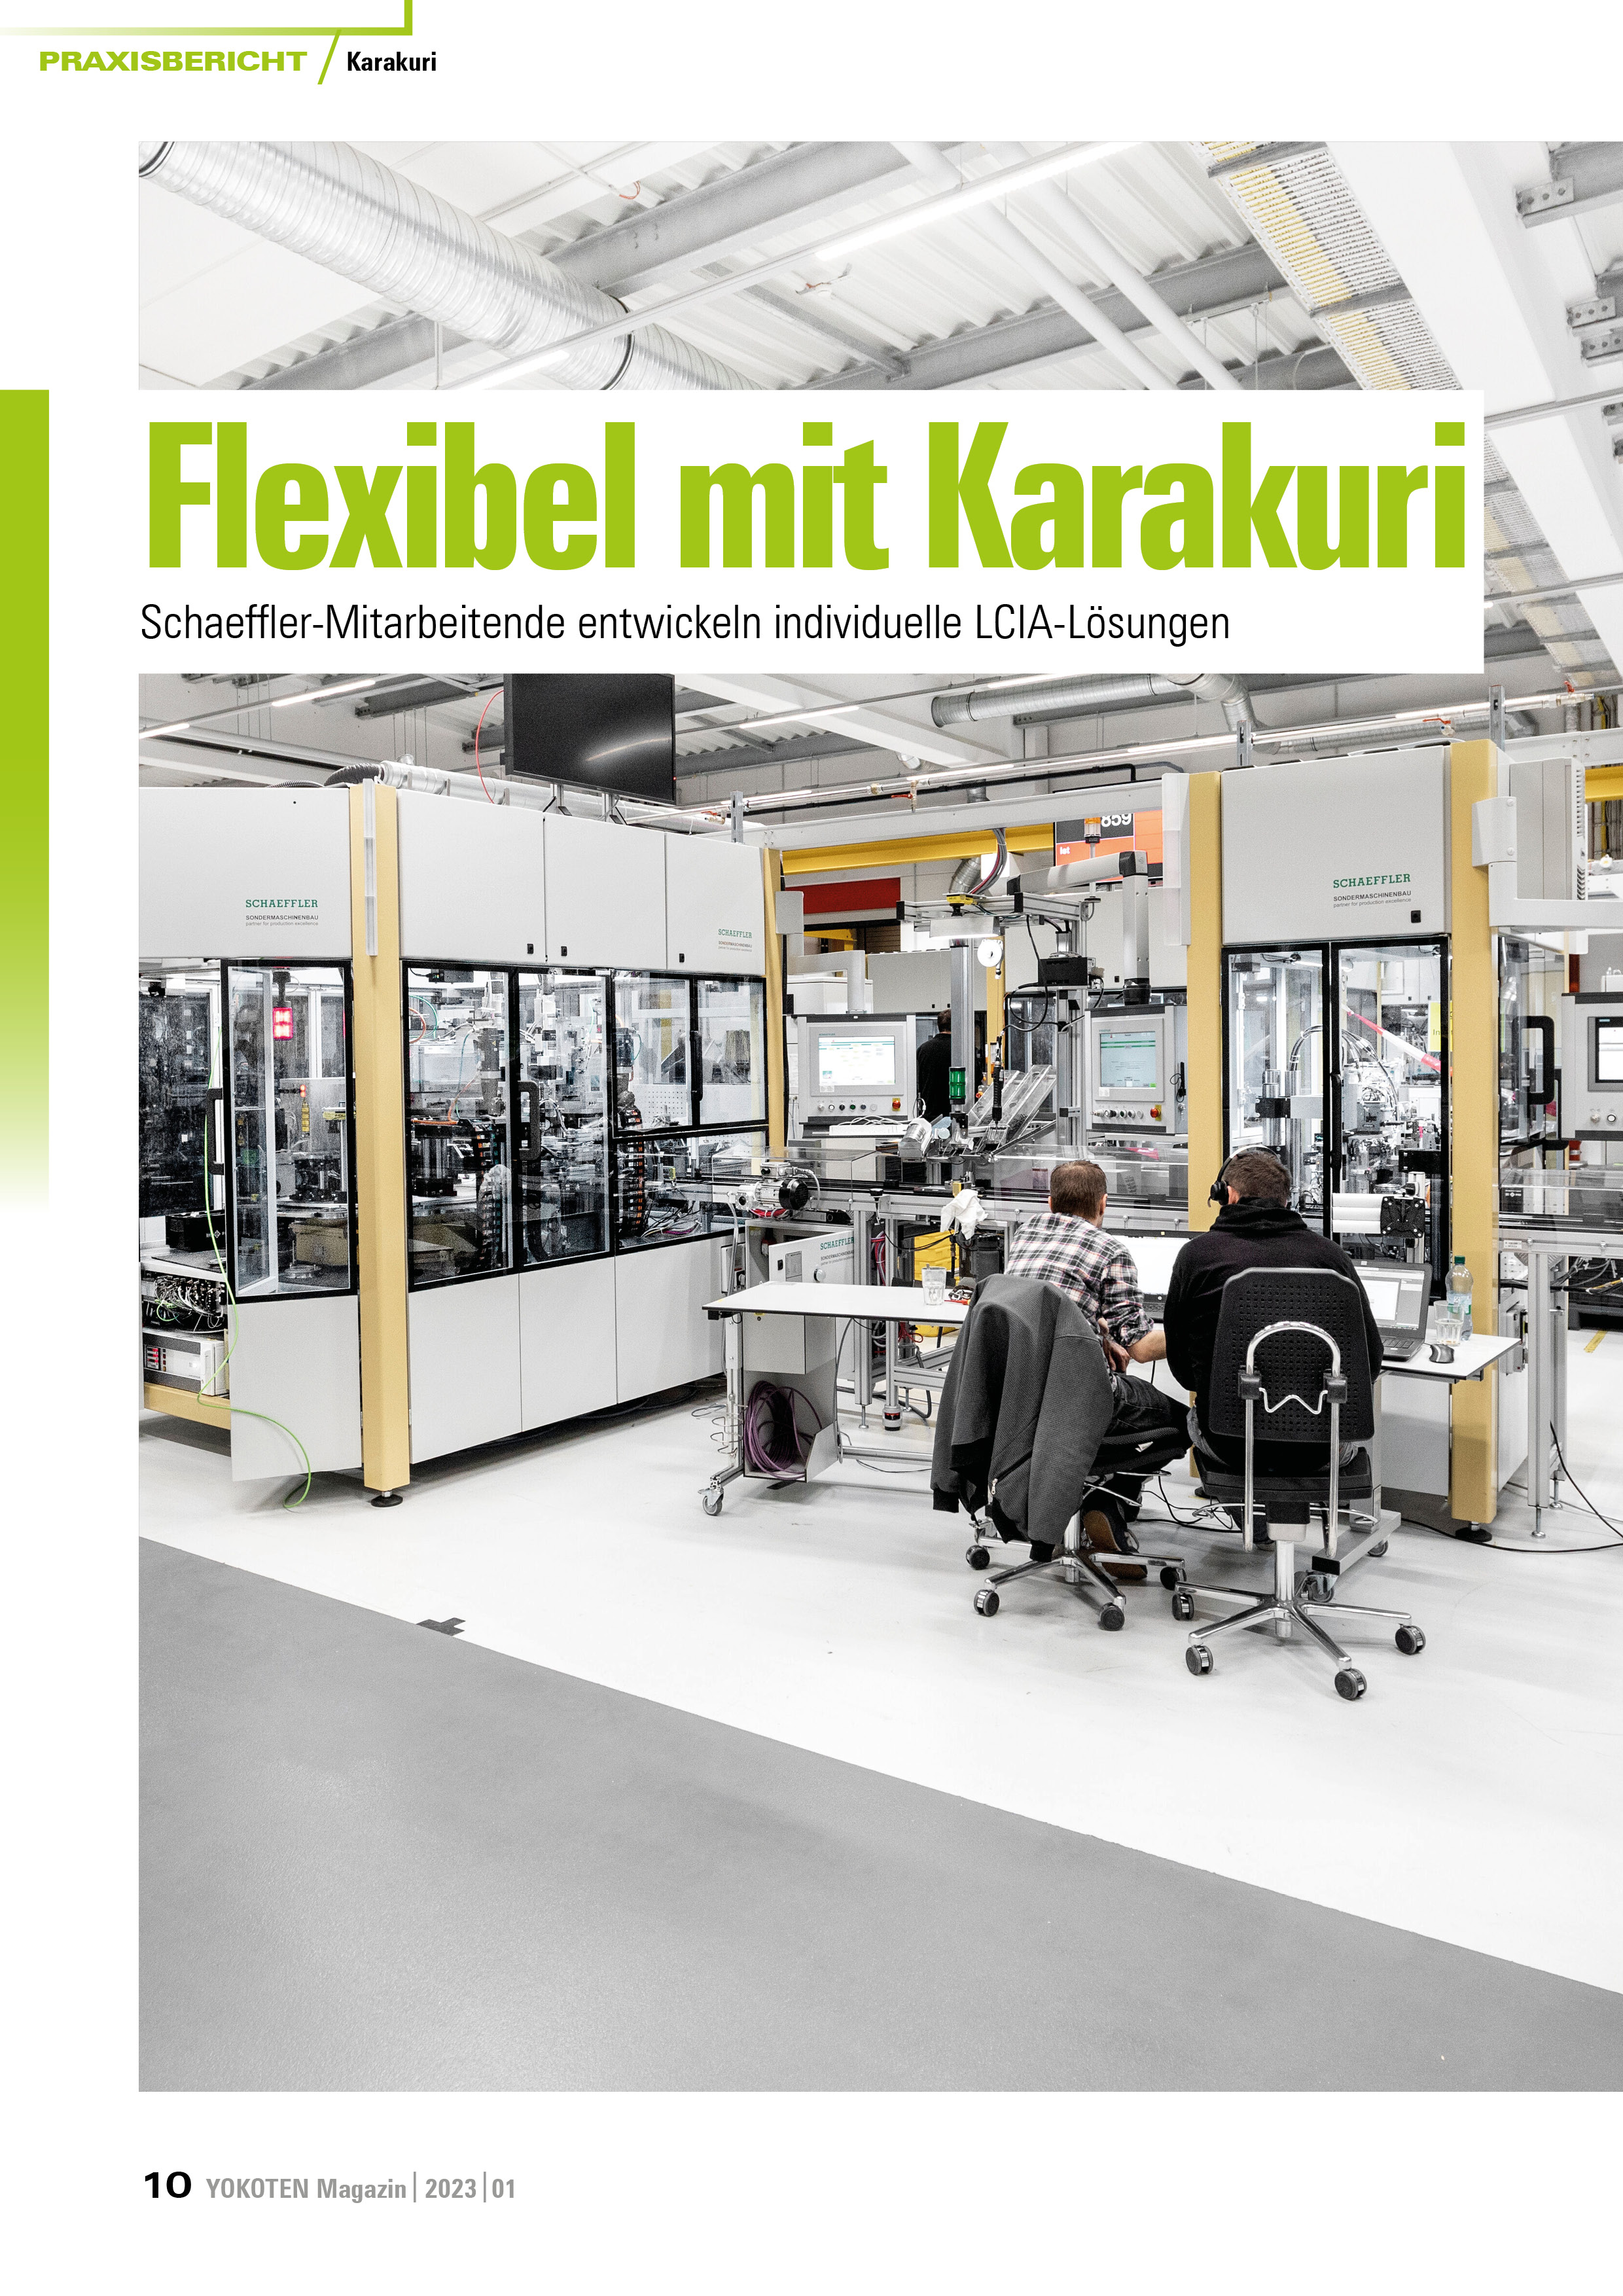 Flexibel mit Karakuri - Artikel aus Fachmagazin YOKOTEN 2023-01